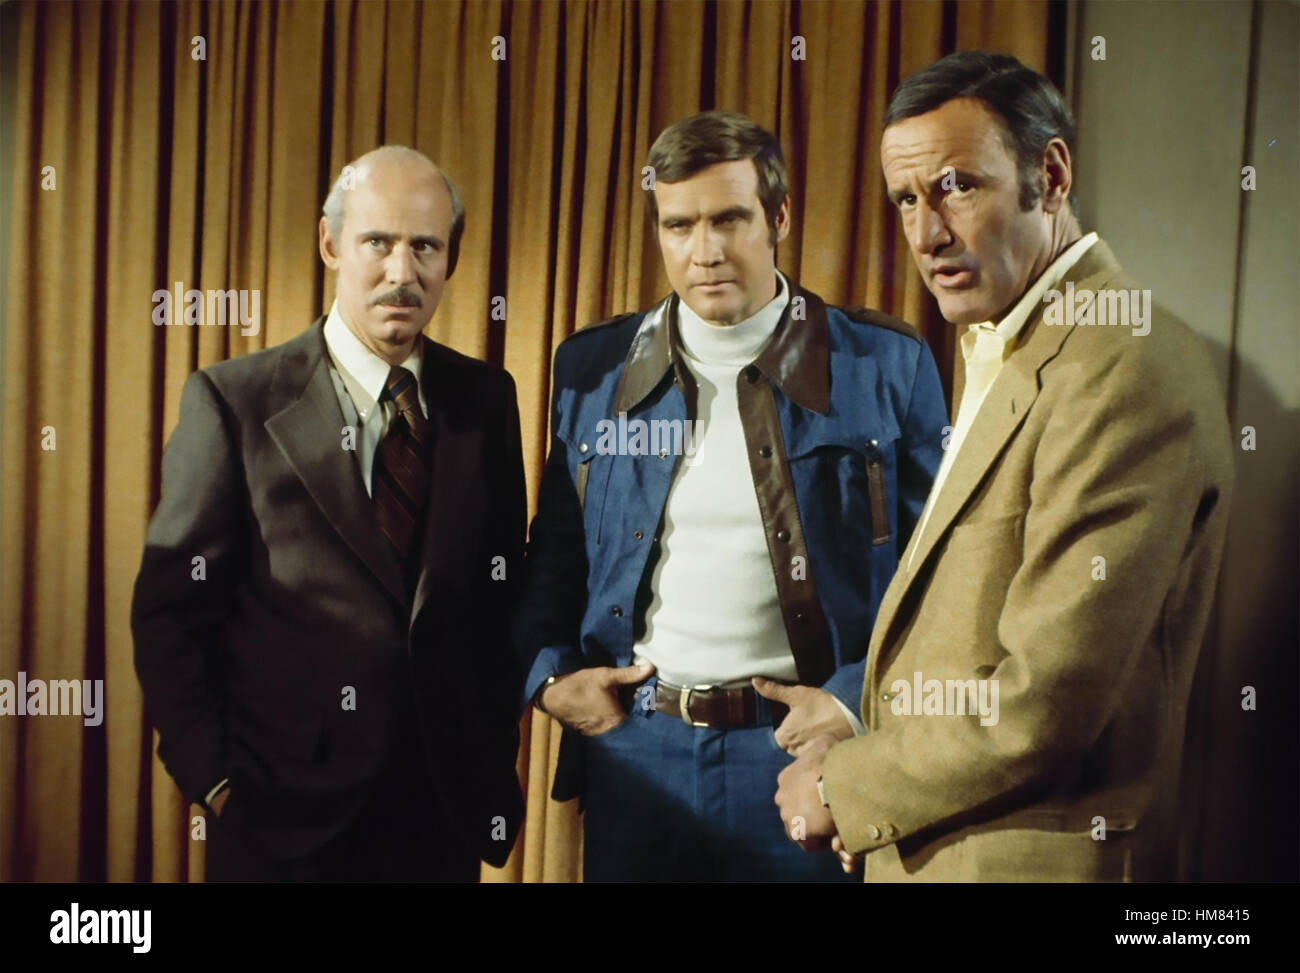 THE SIX MILLION DOLLAR MAN  - ABC/UNIVERSAL TV series 1974-1978 with from left: Alan Oppenheimer, Lee Majors, James Garner, Richard Anderson Stock Photo